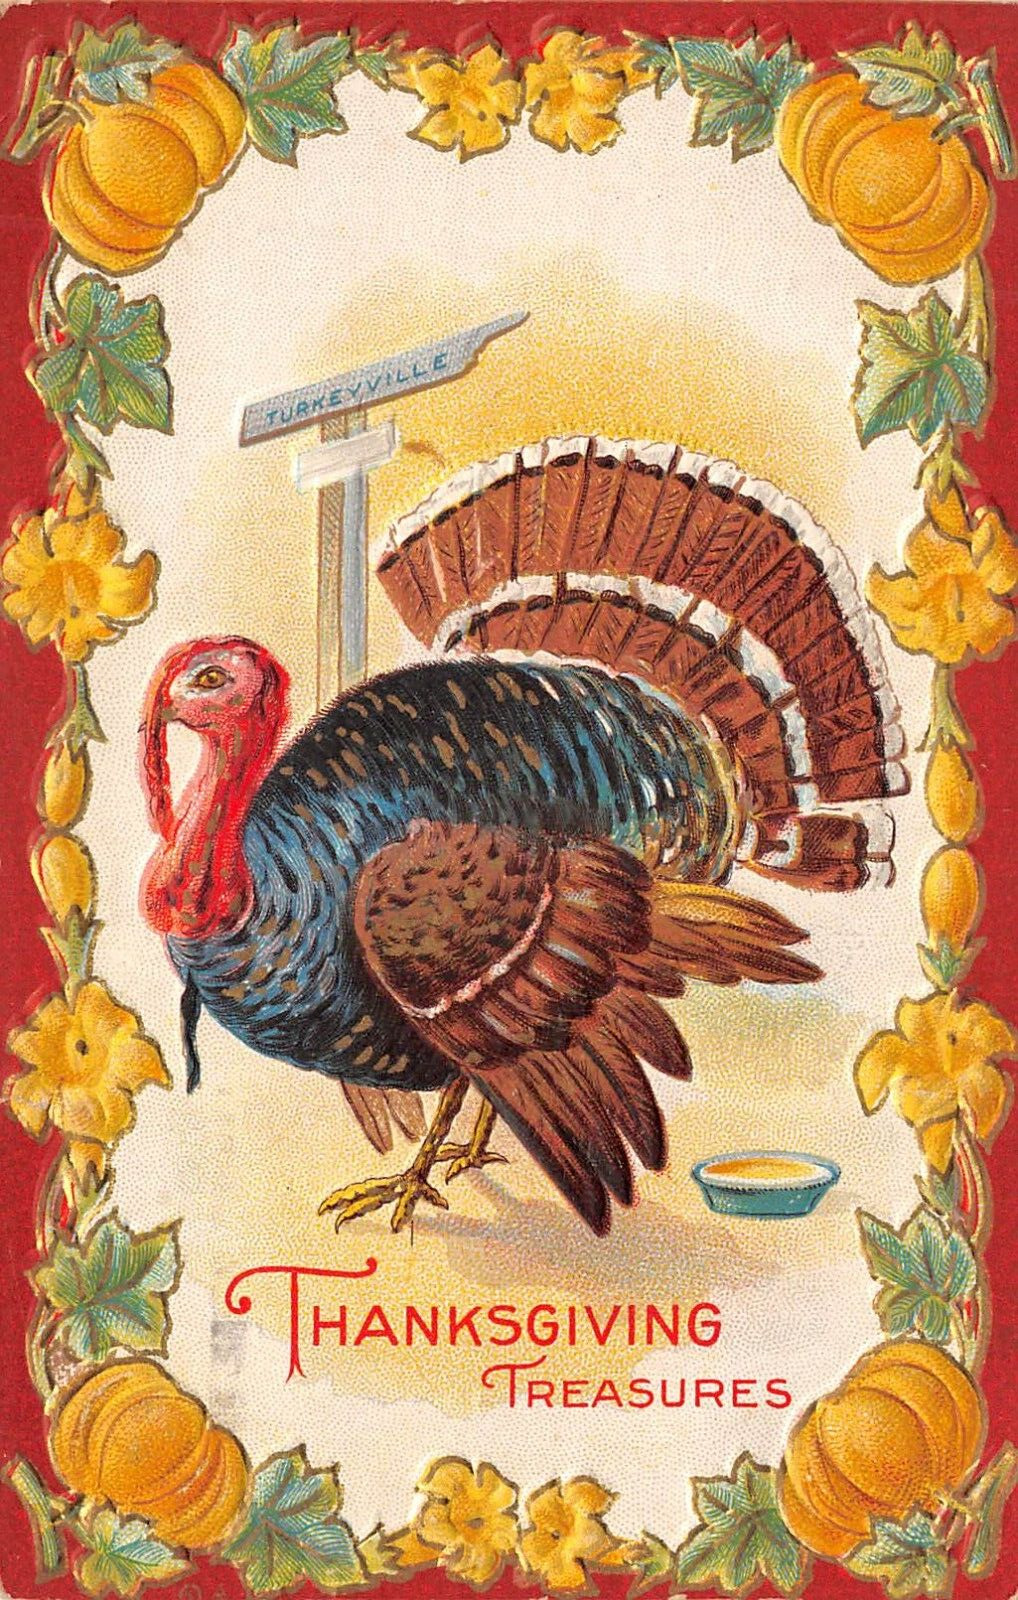 Thanksgiving Treasures Embossed Turkey Turkeyville Pumpkin Border Postcard